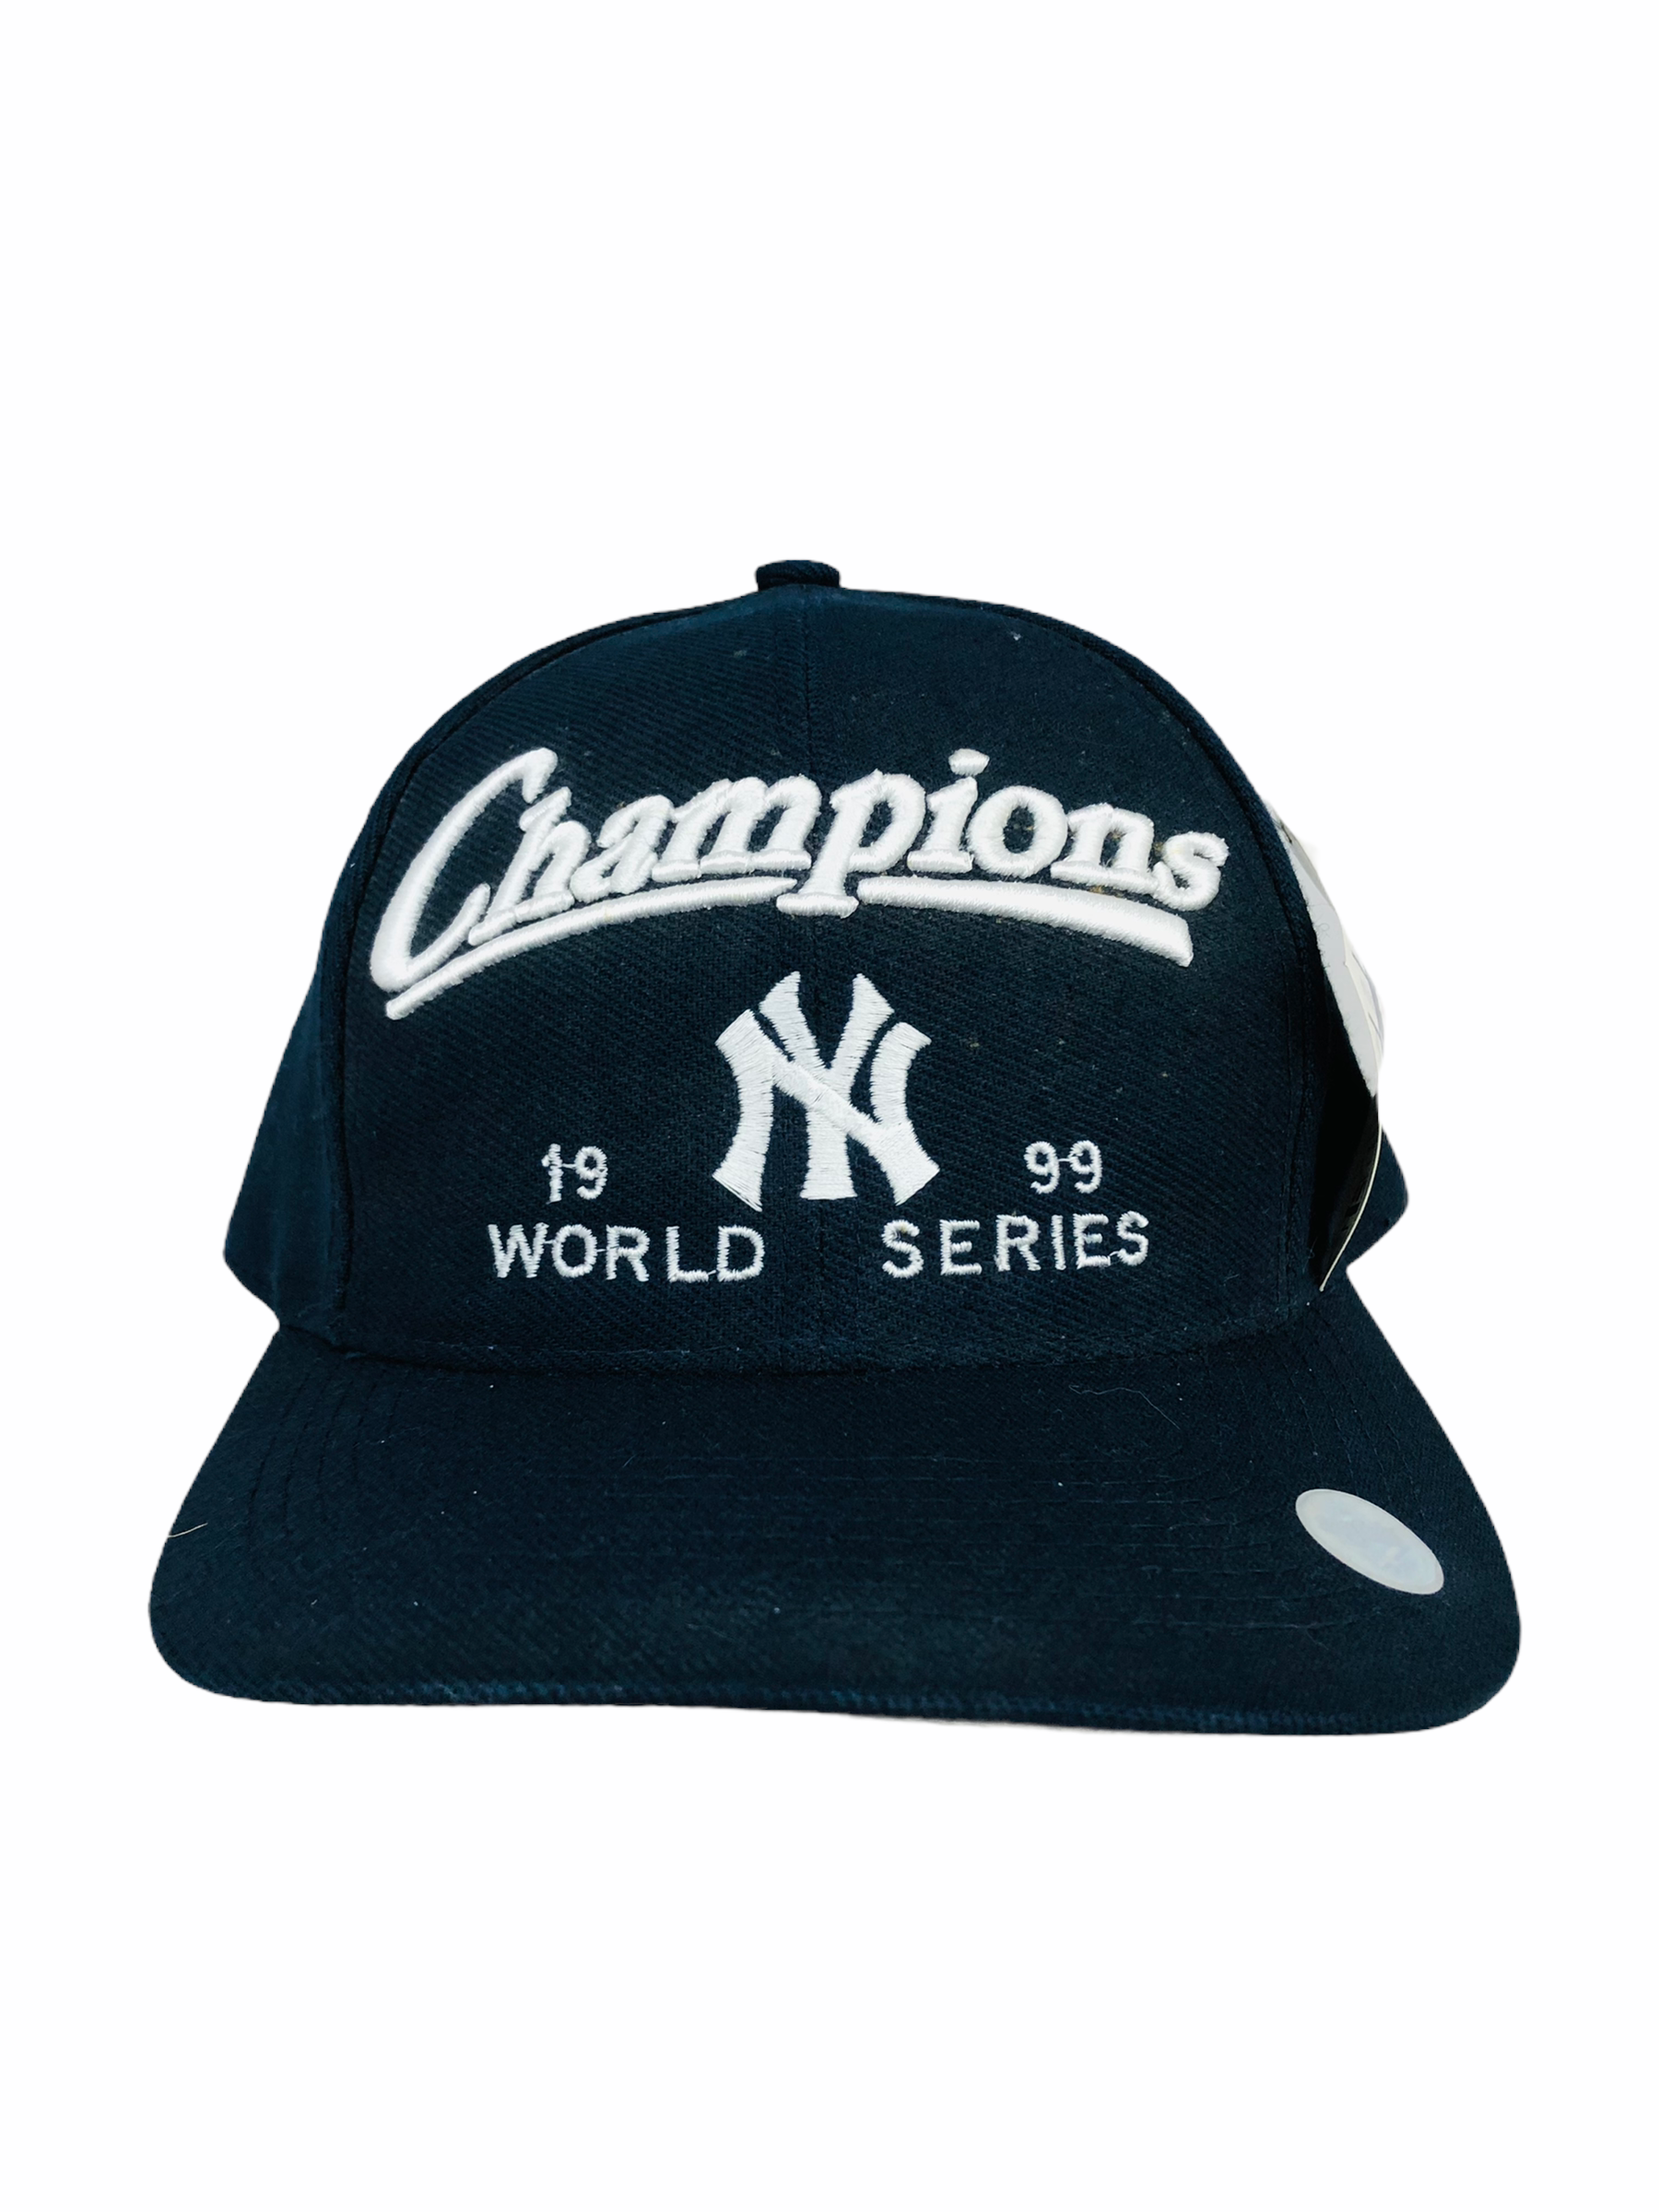 Vintage perfect condition Yankees baseball cap